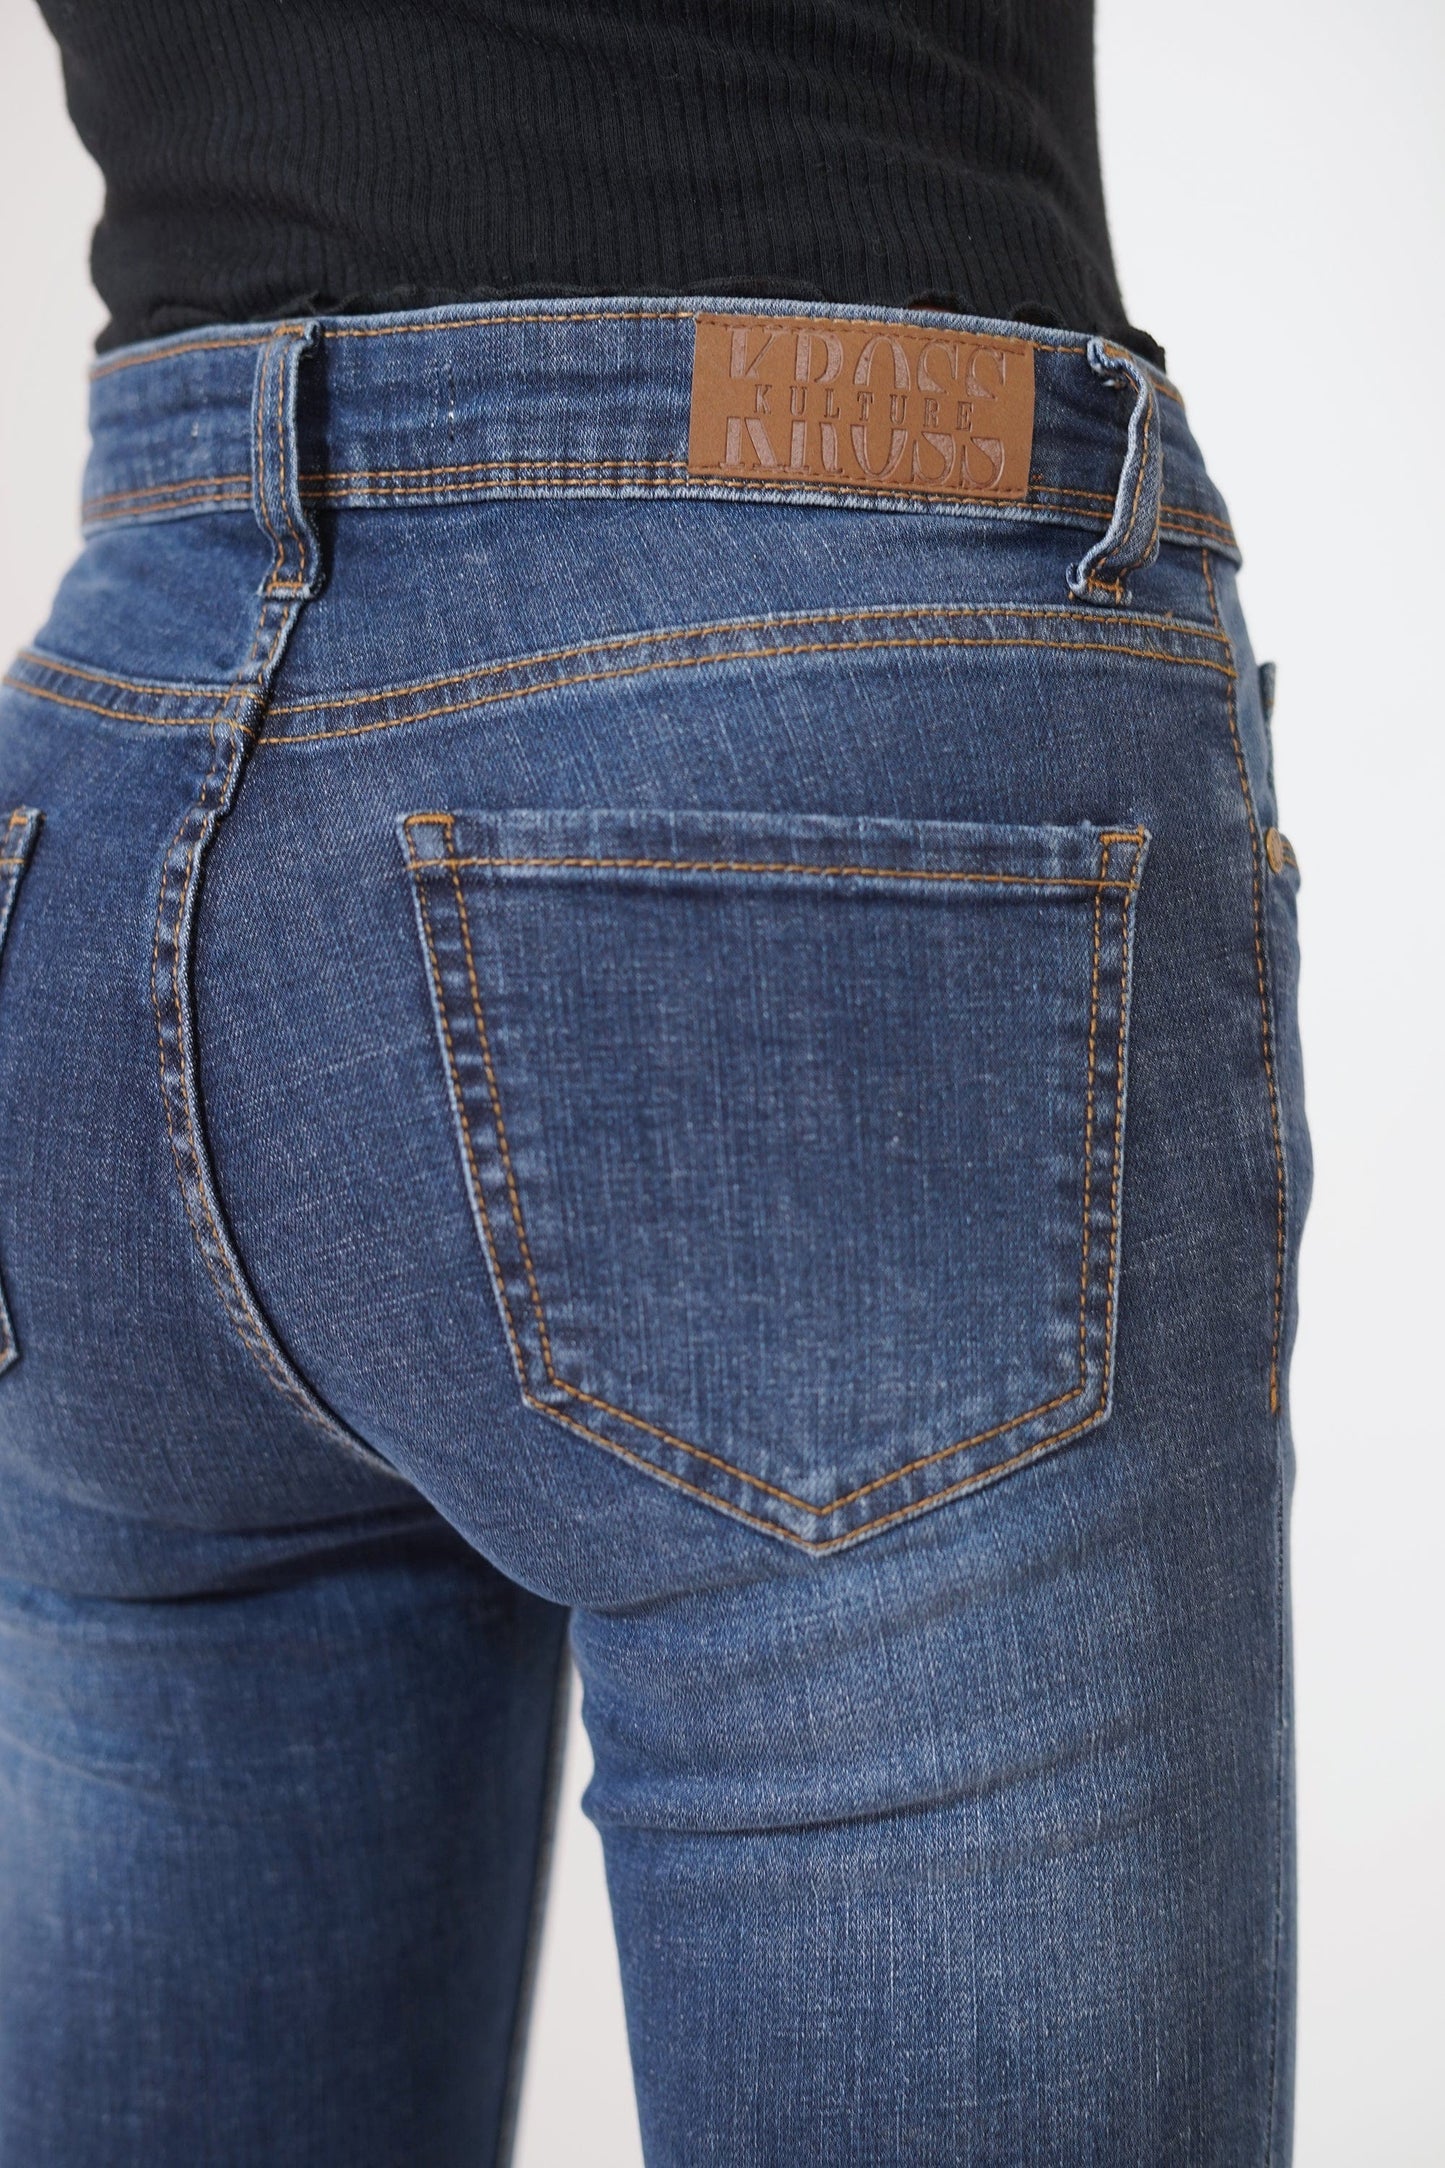 kross kulture  Bottom Jeans KWA-22-024